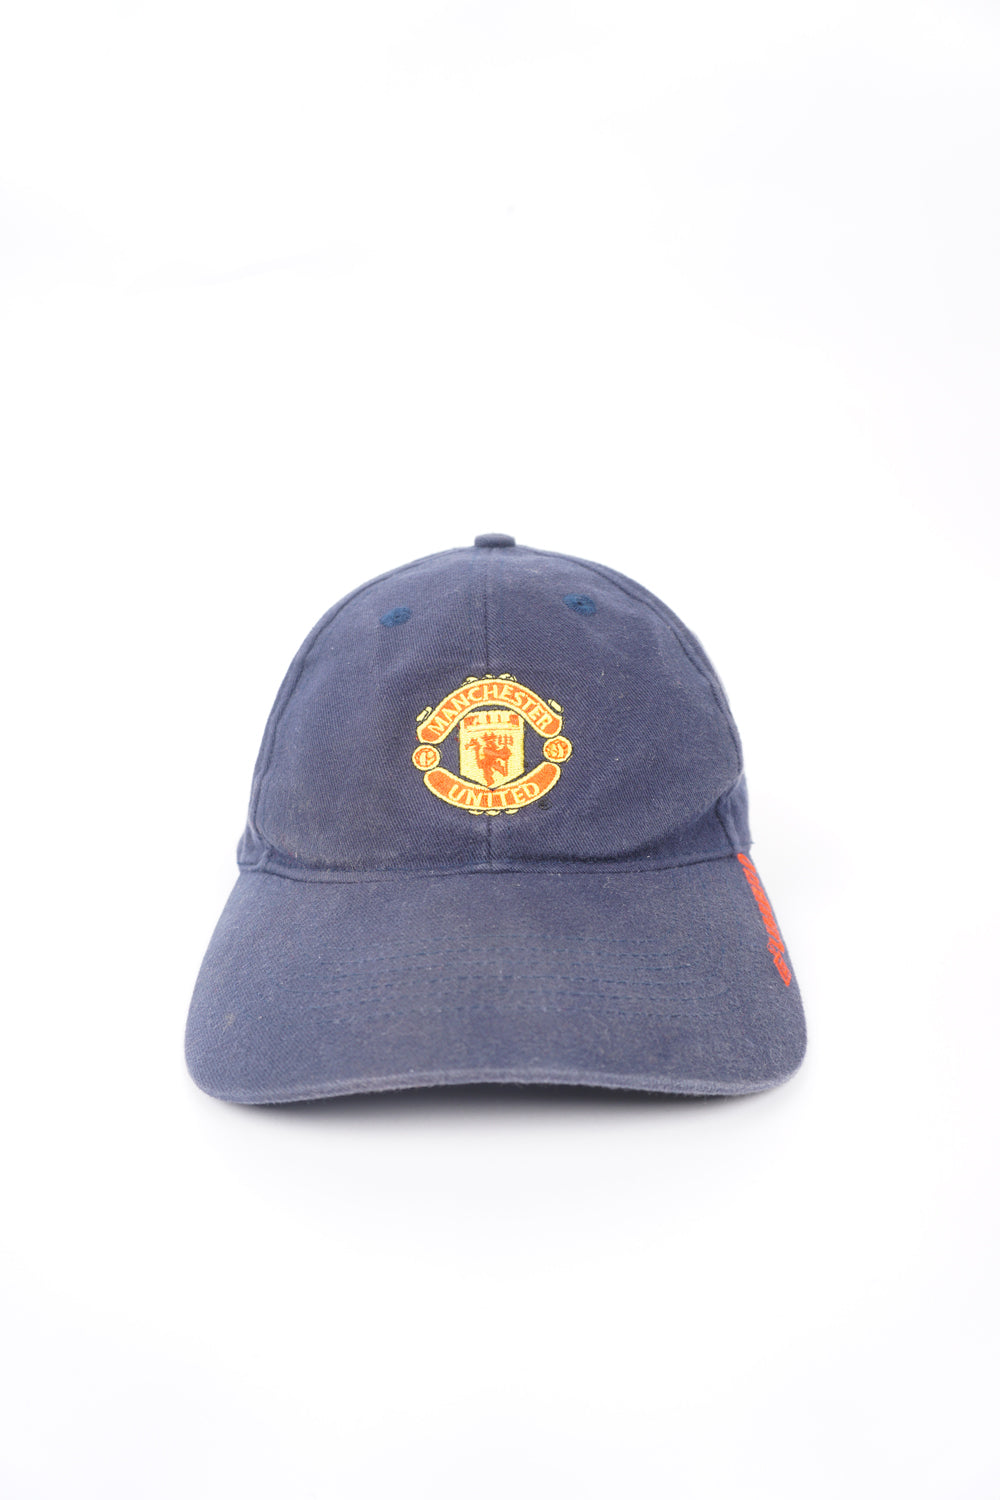 Manchester United Cap – VintageFolk